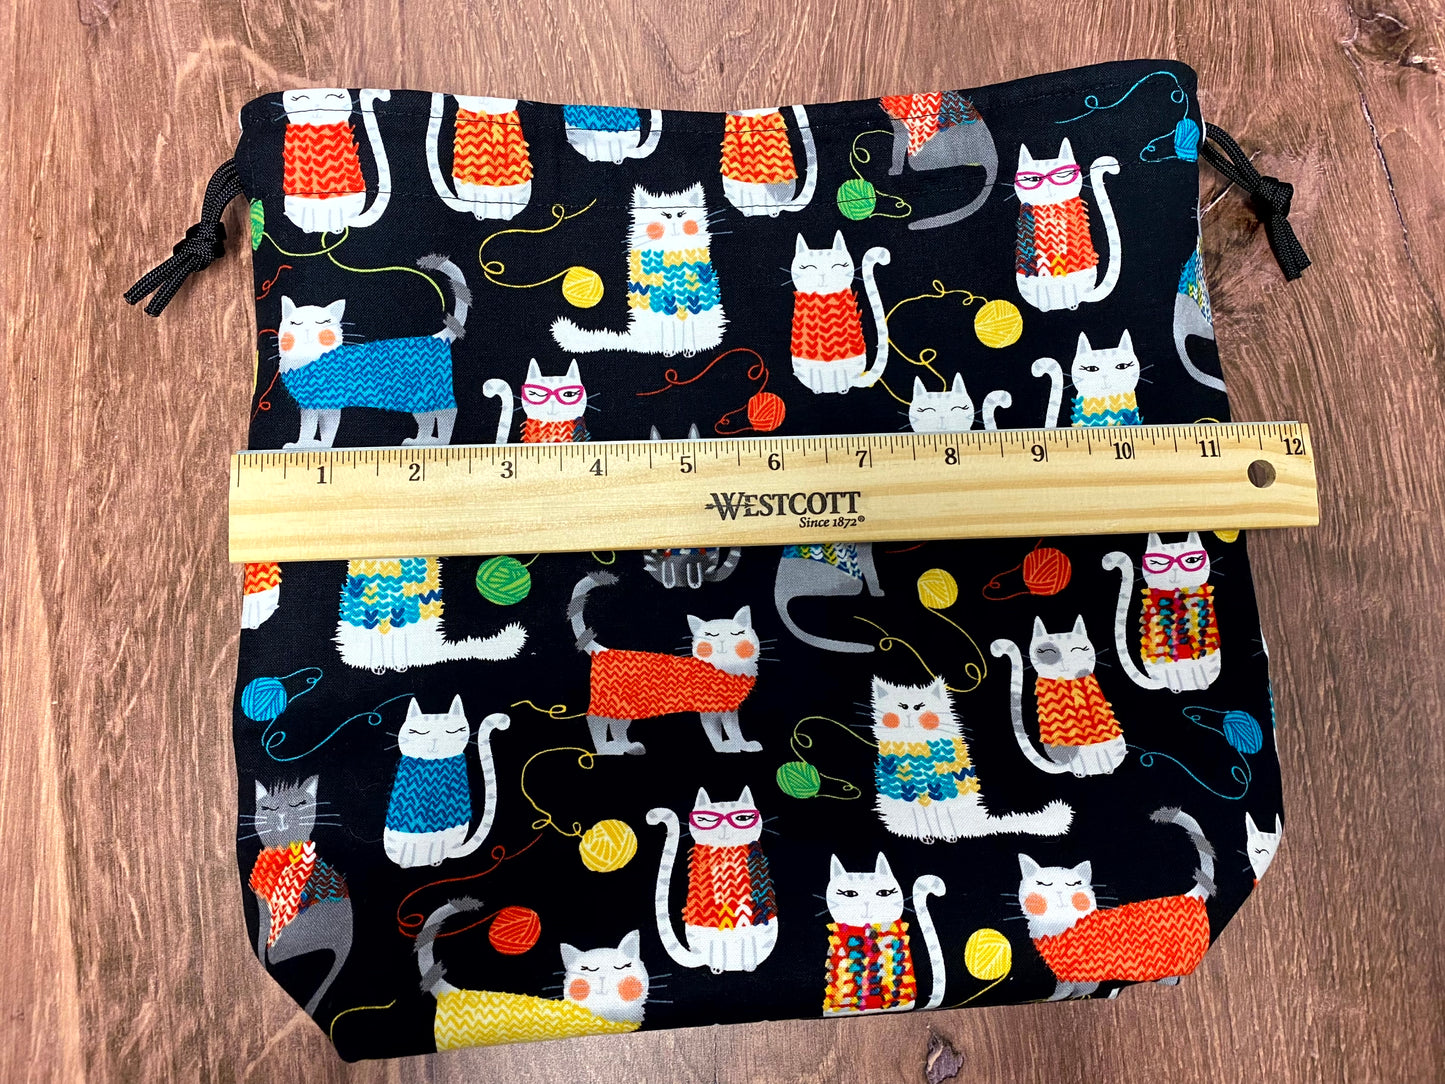 Cat Project Bag - Handmade - Drawstring Bag – Knitting Bag – Crochet Bag - Cross Stitch Bag - Toy Sack - Bingo Bag - Cats - Yarn Balls